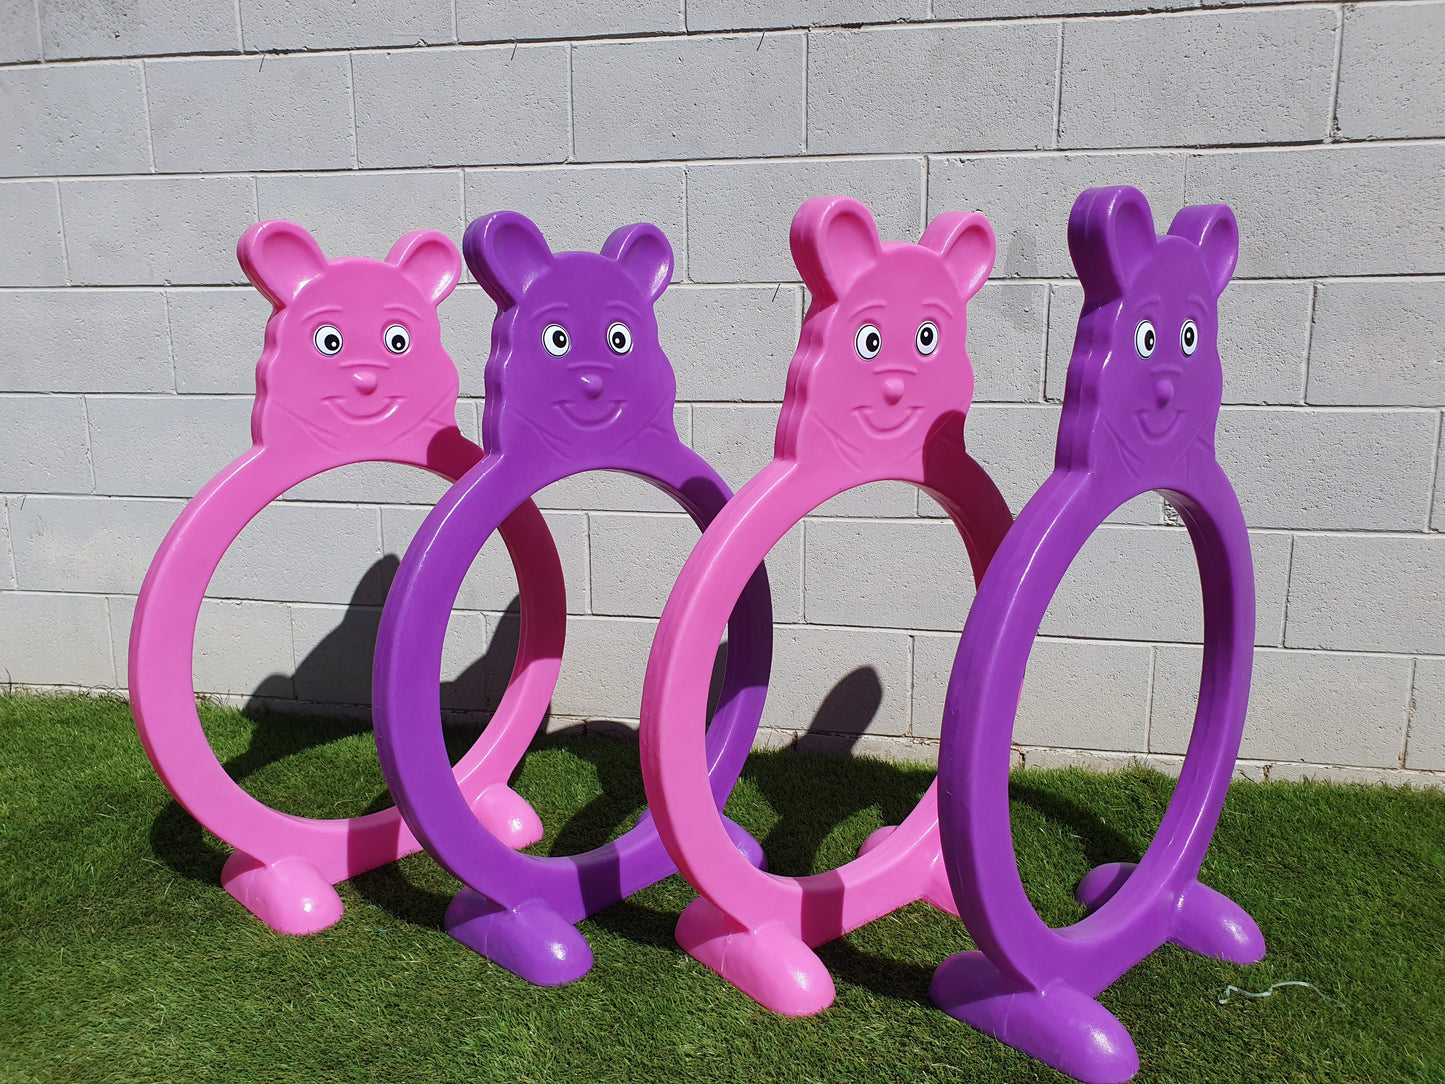 Bear Circles Toys - Pink and Purple, North Brisbane